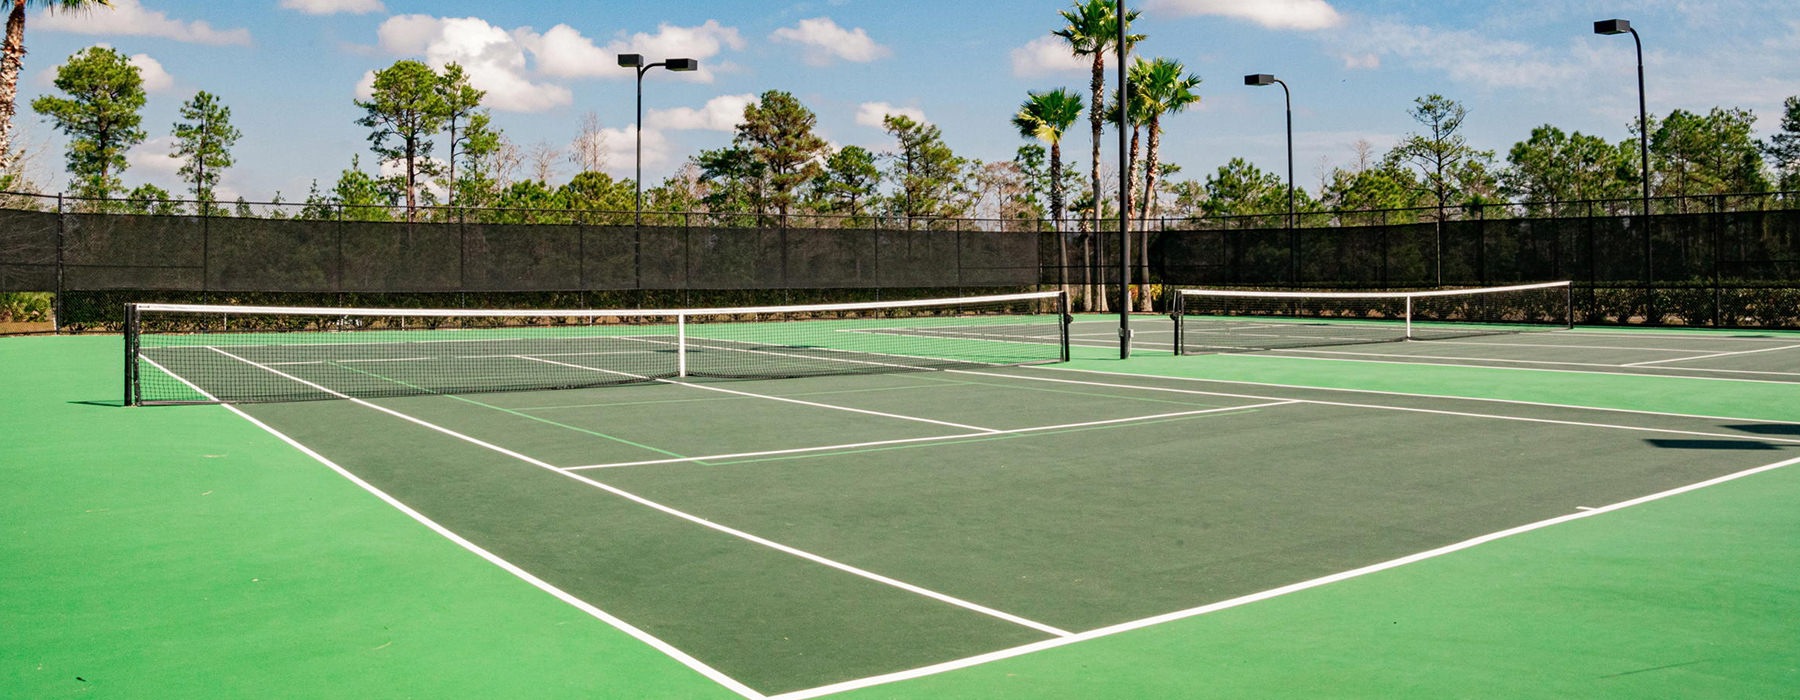 Large tennis match 